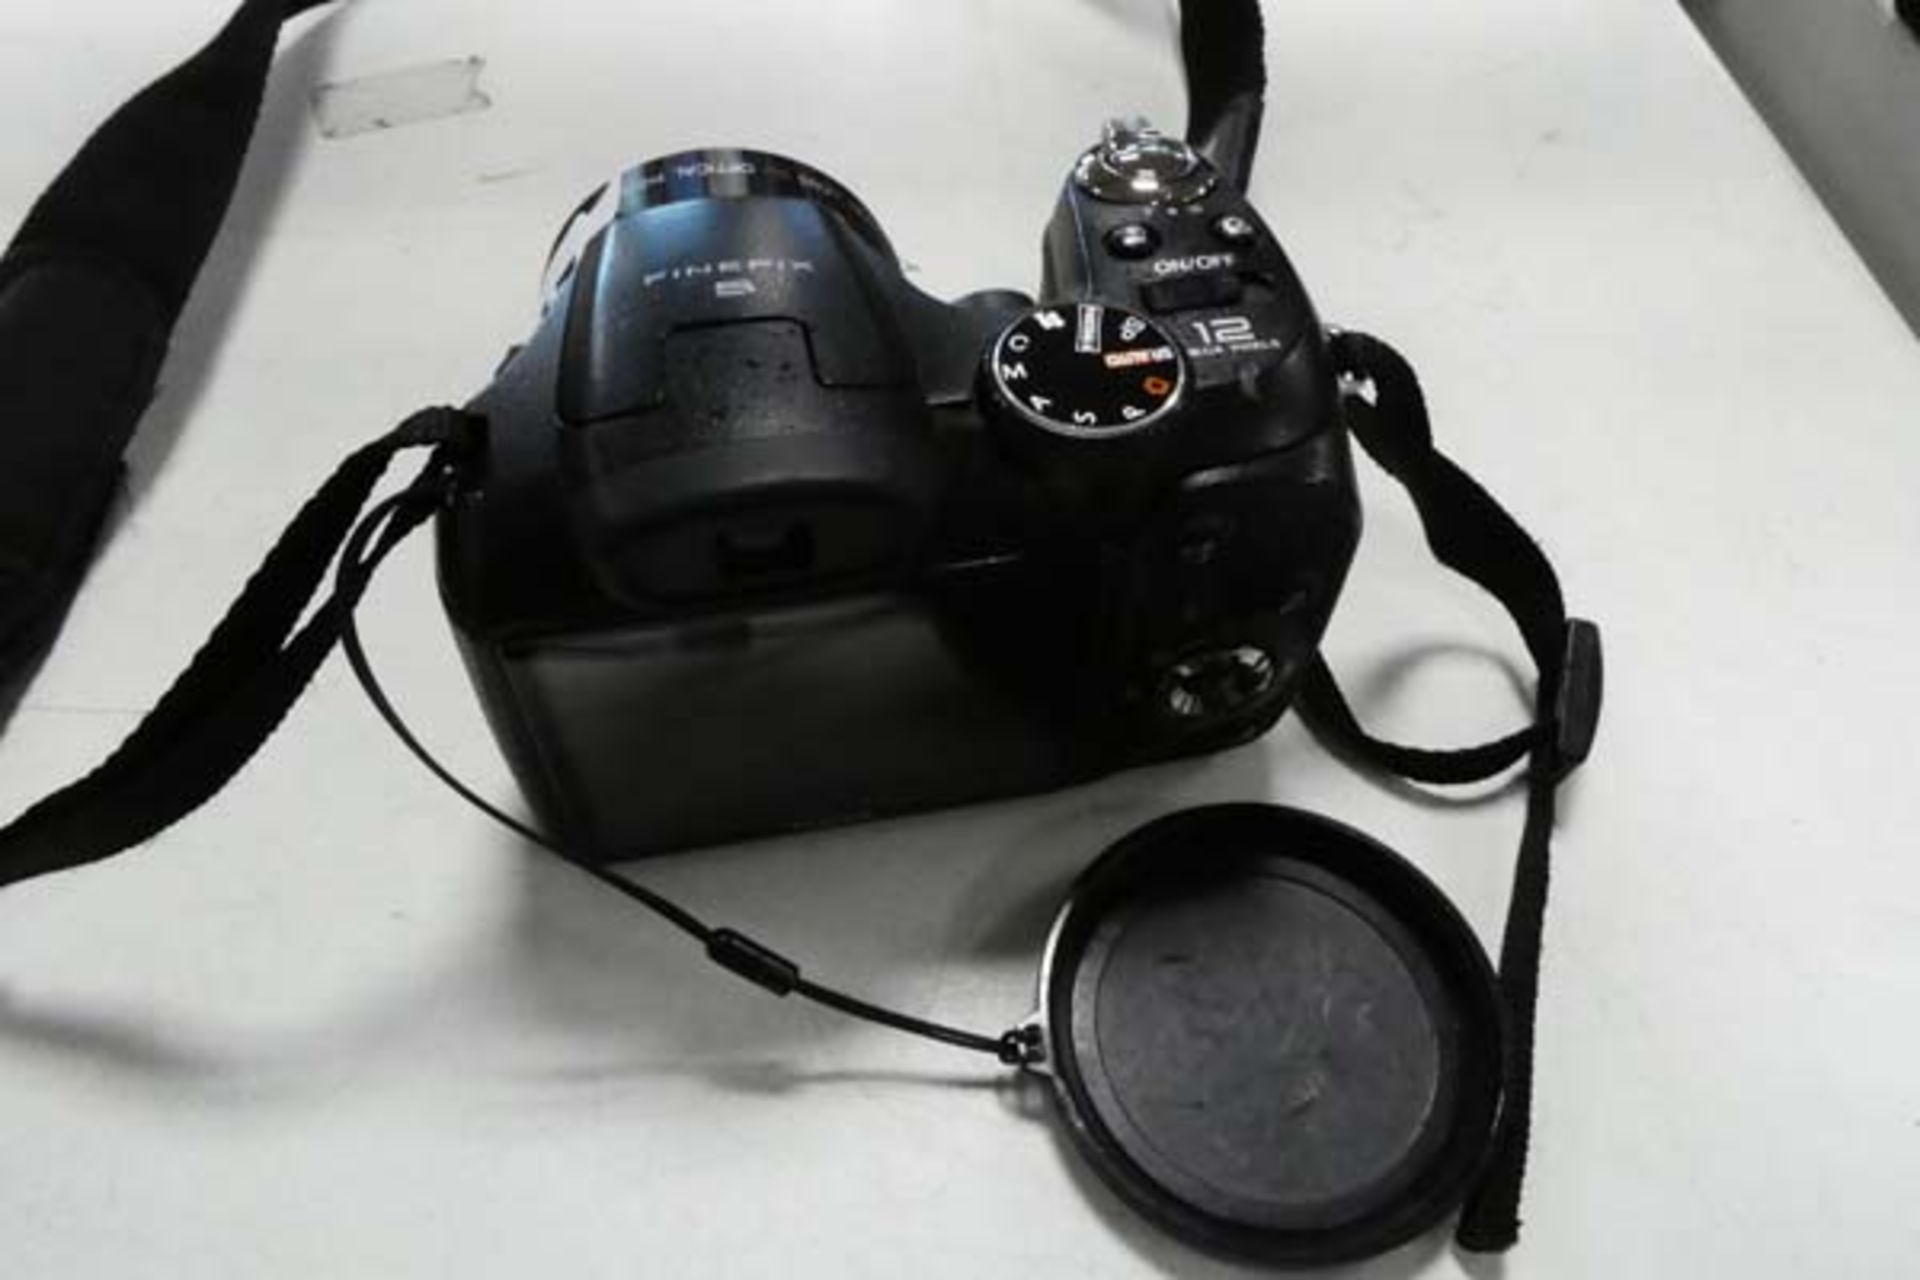 Fujifilm digital camera model S1730 - Image 2 of 2